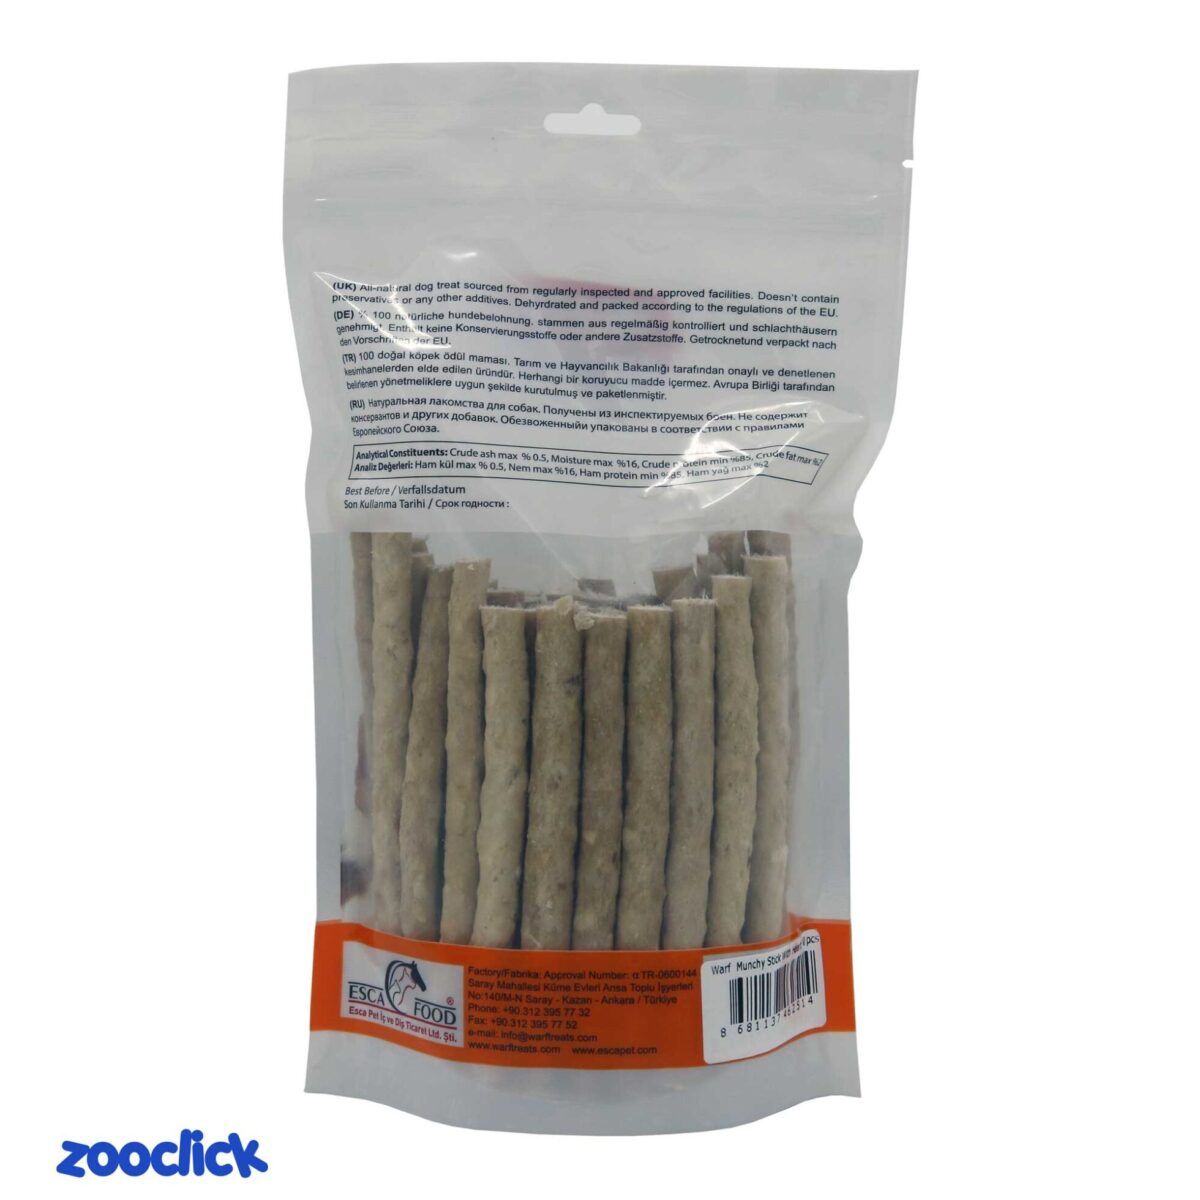 zc-warf-muncy-stick-natural-dog-treats-46251-